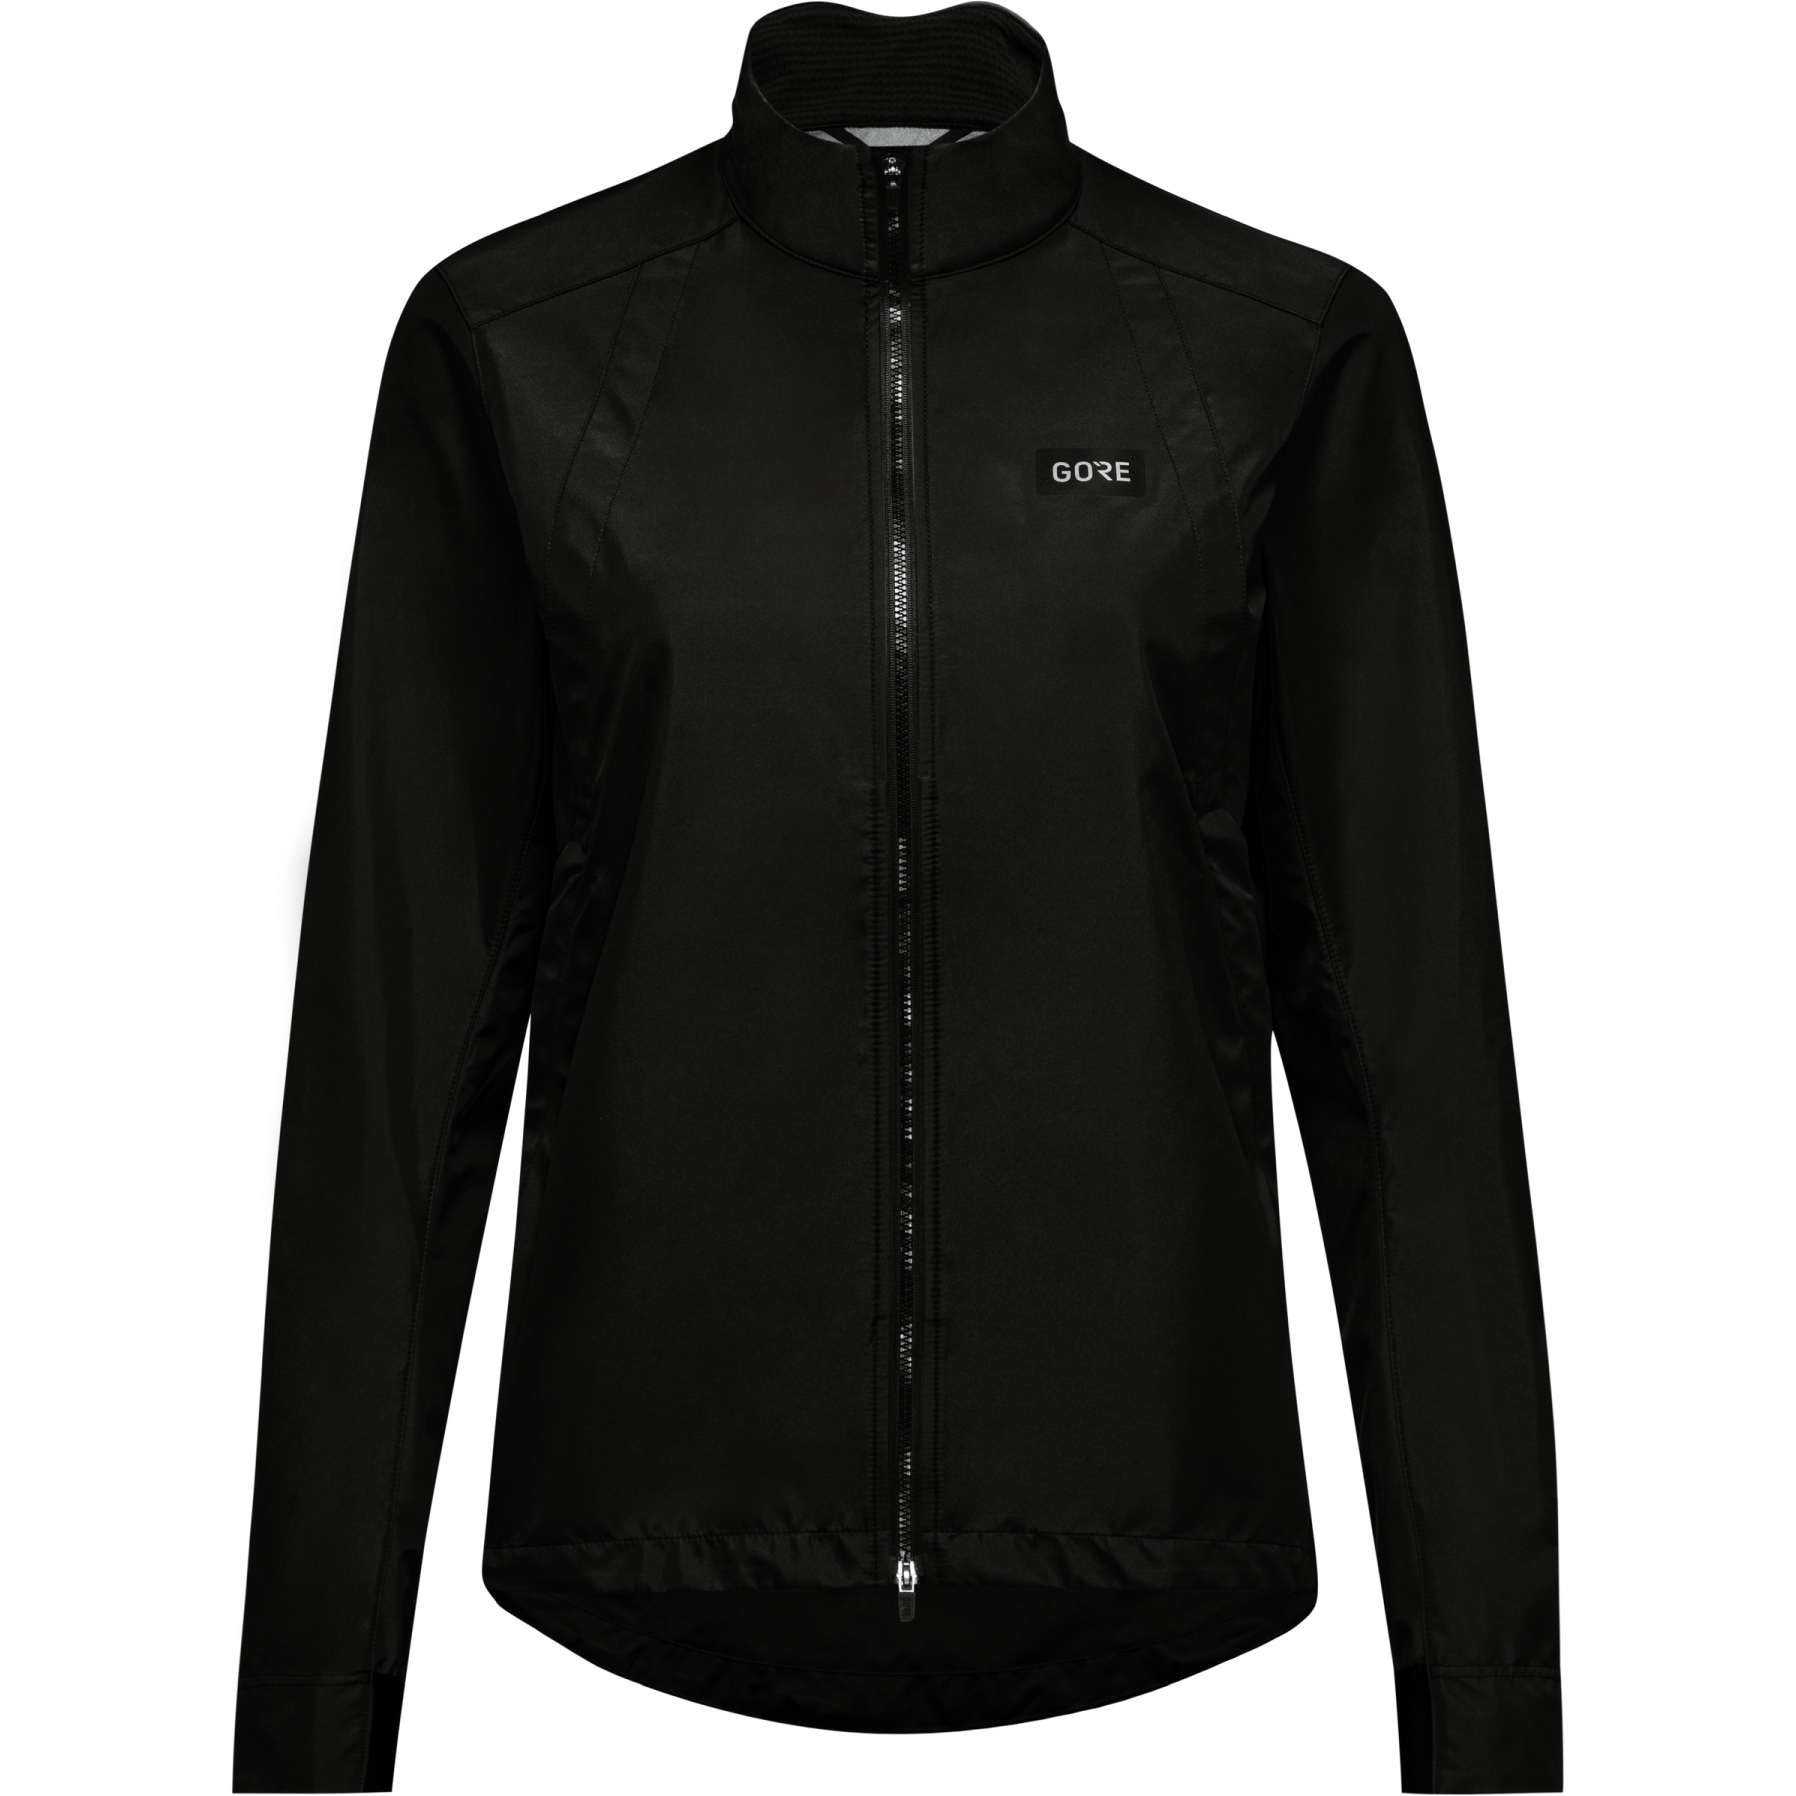 GOREWEAR Everyday Jacket Women - black 9900 | BIKE24